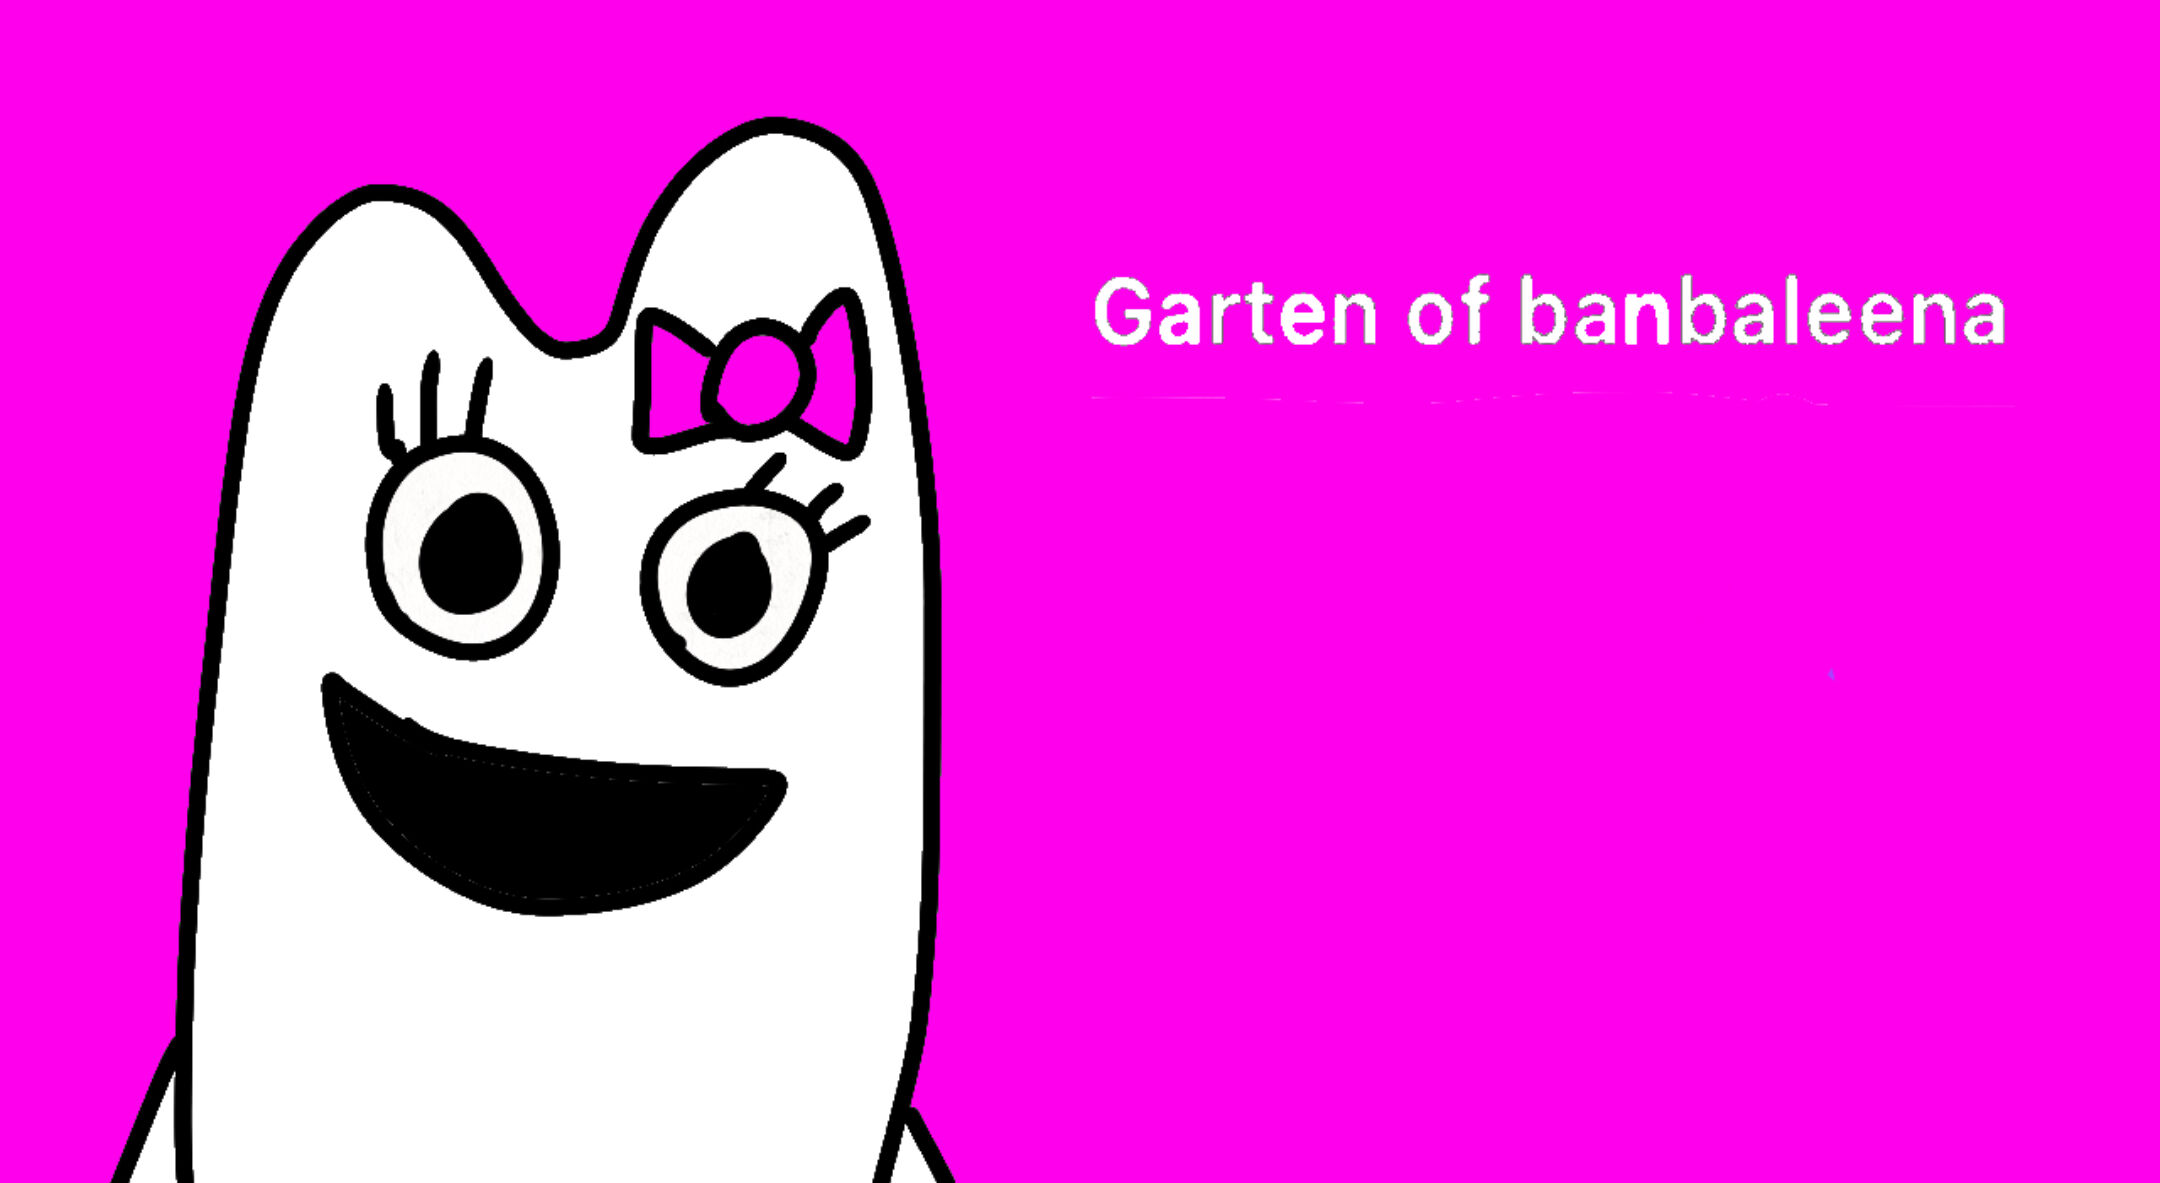 Banbaleena (Little Elcho), Garten of Banban Fanon Wiki